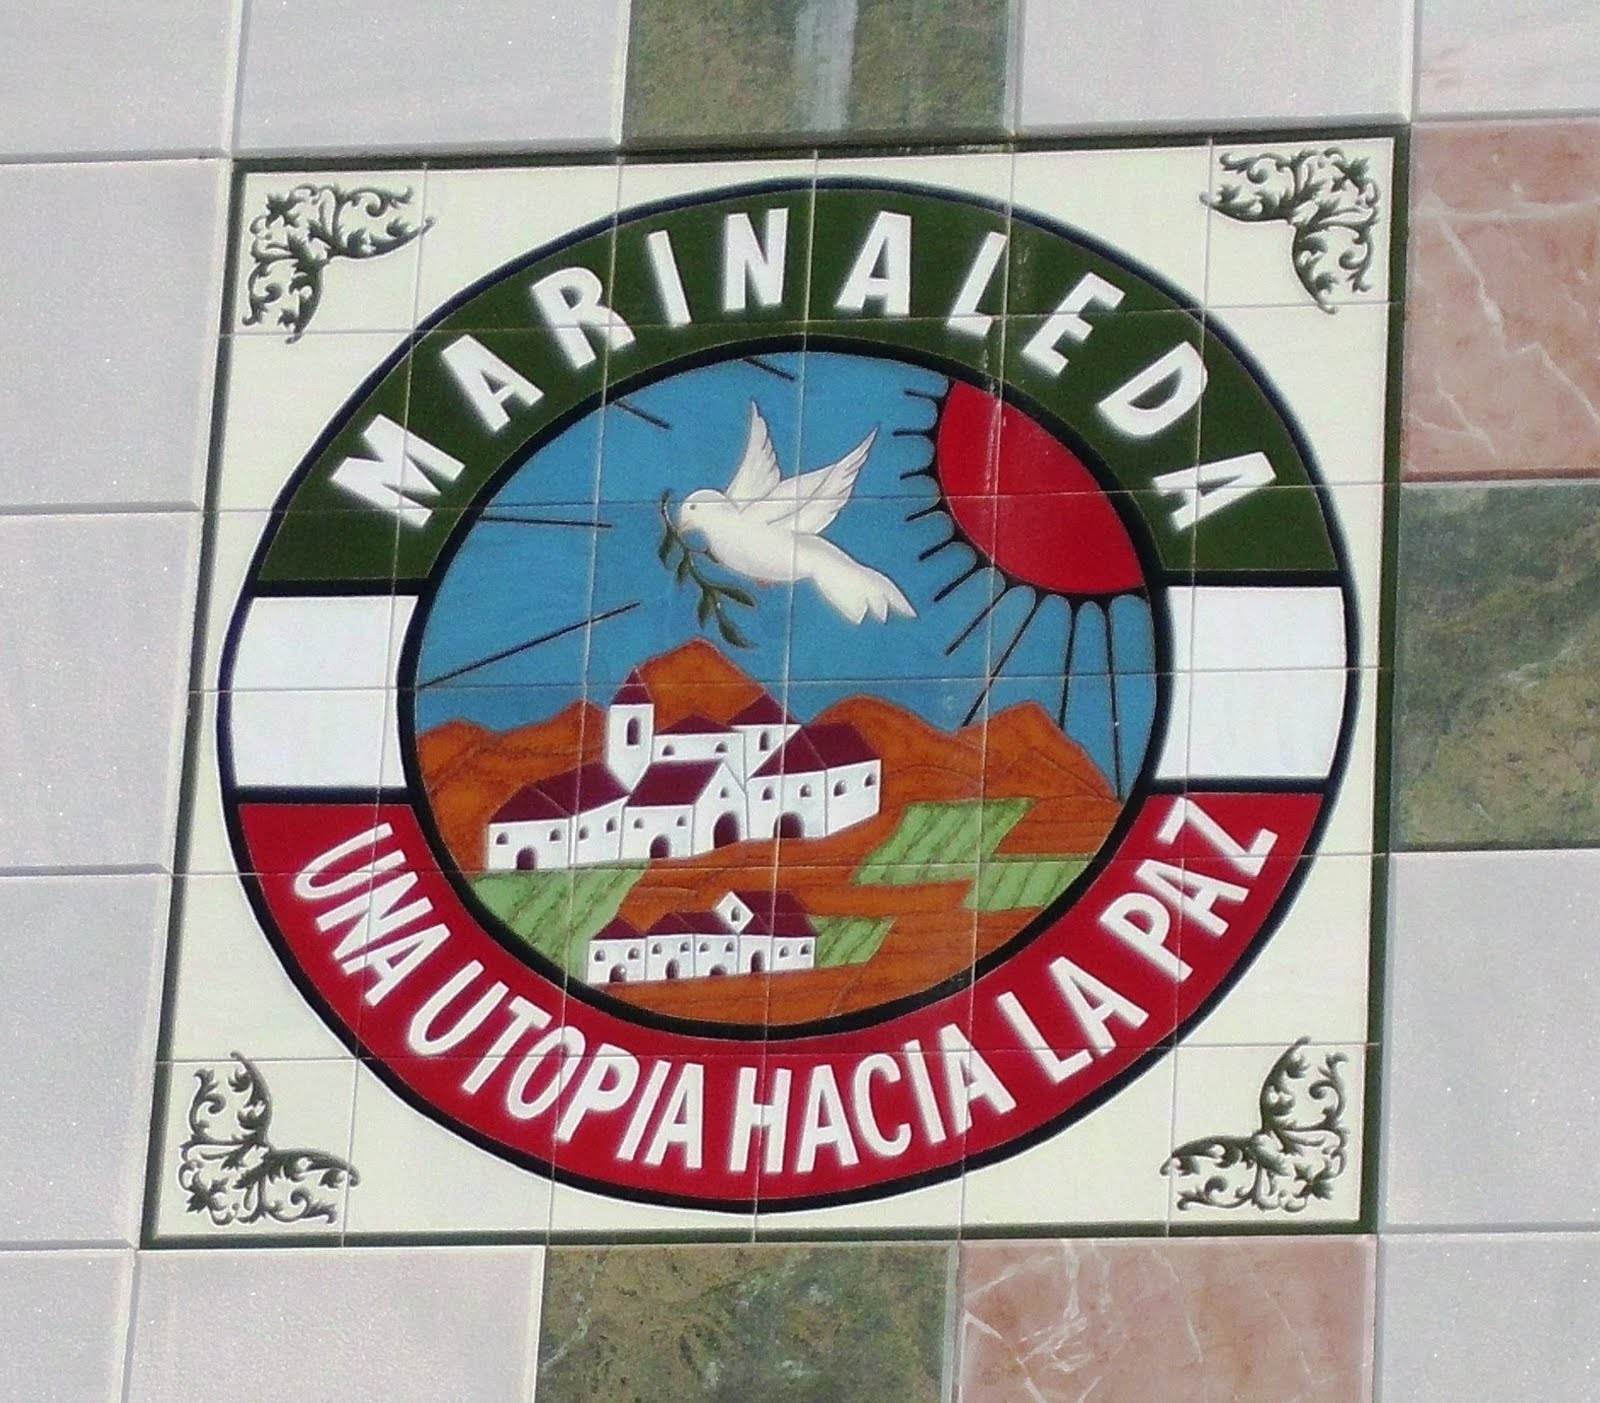 Mαριναλέδα (Marinaleda)